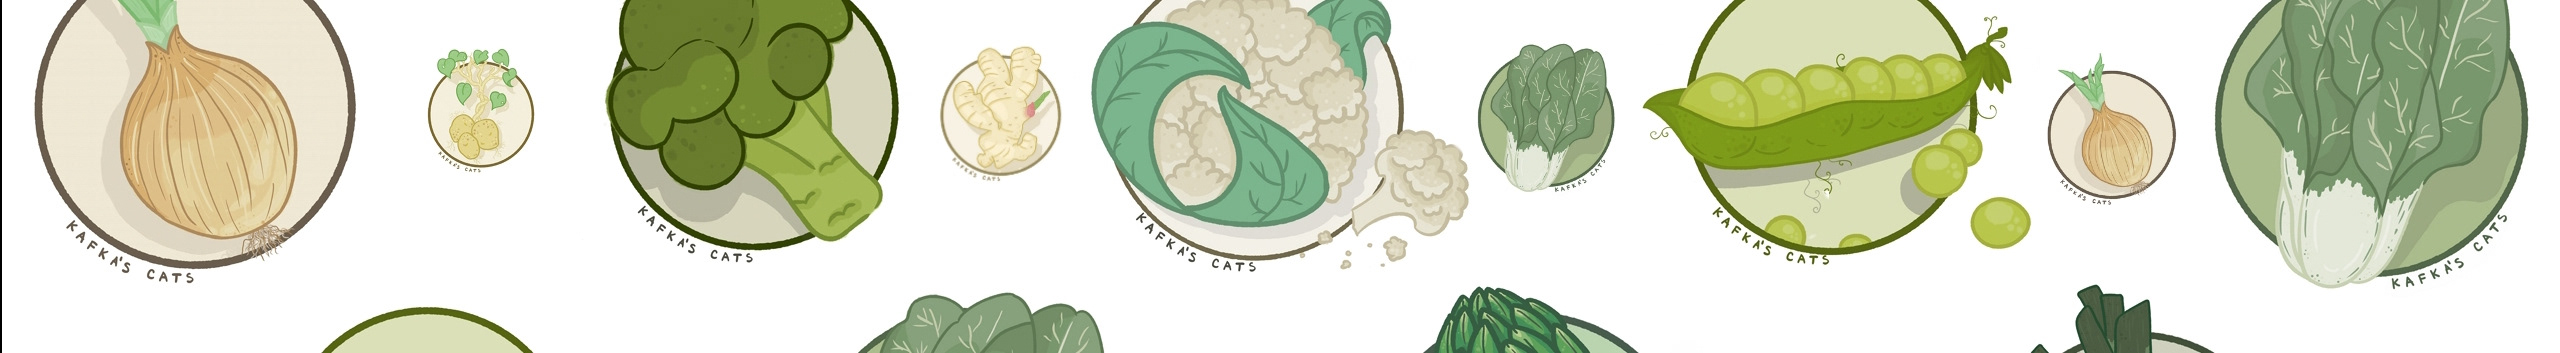 Kafka's Cats's profile banner